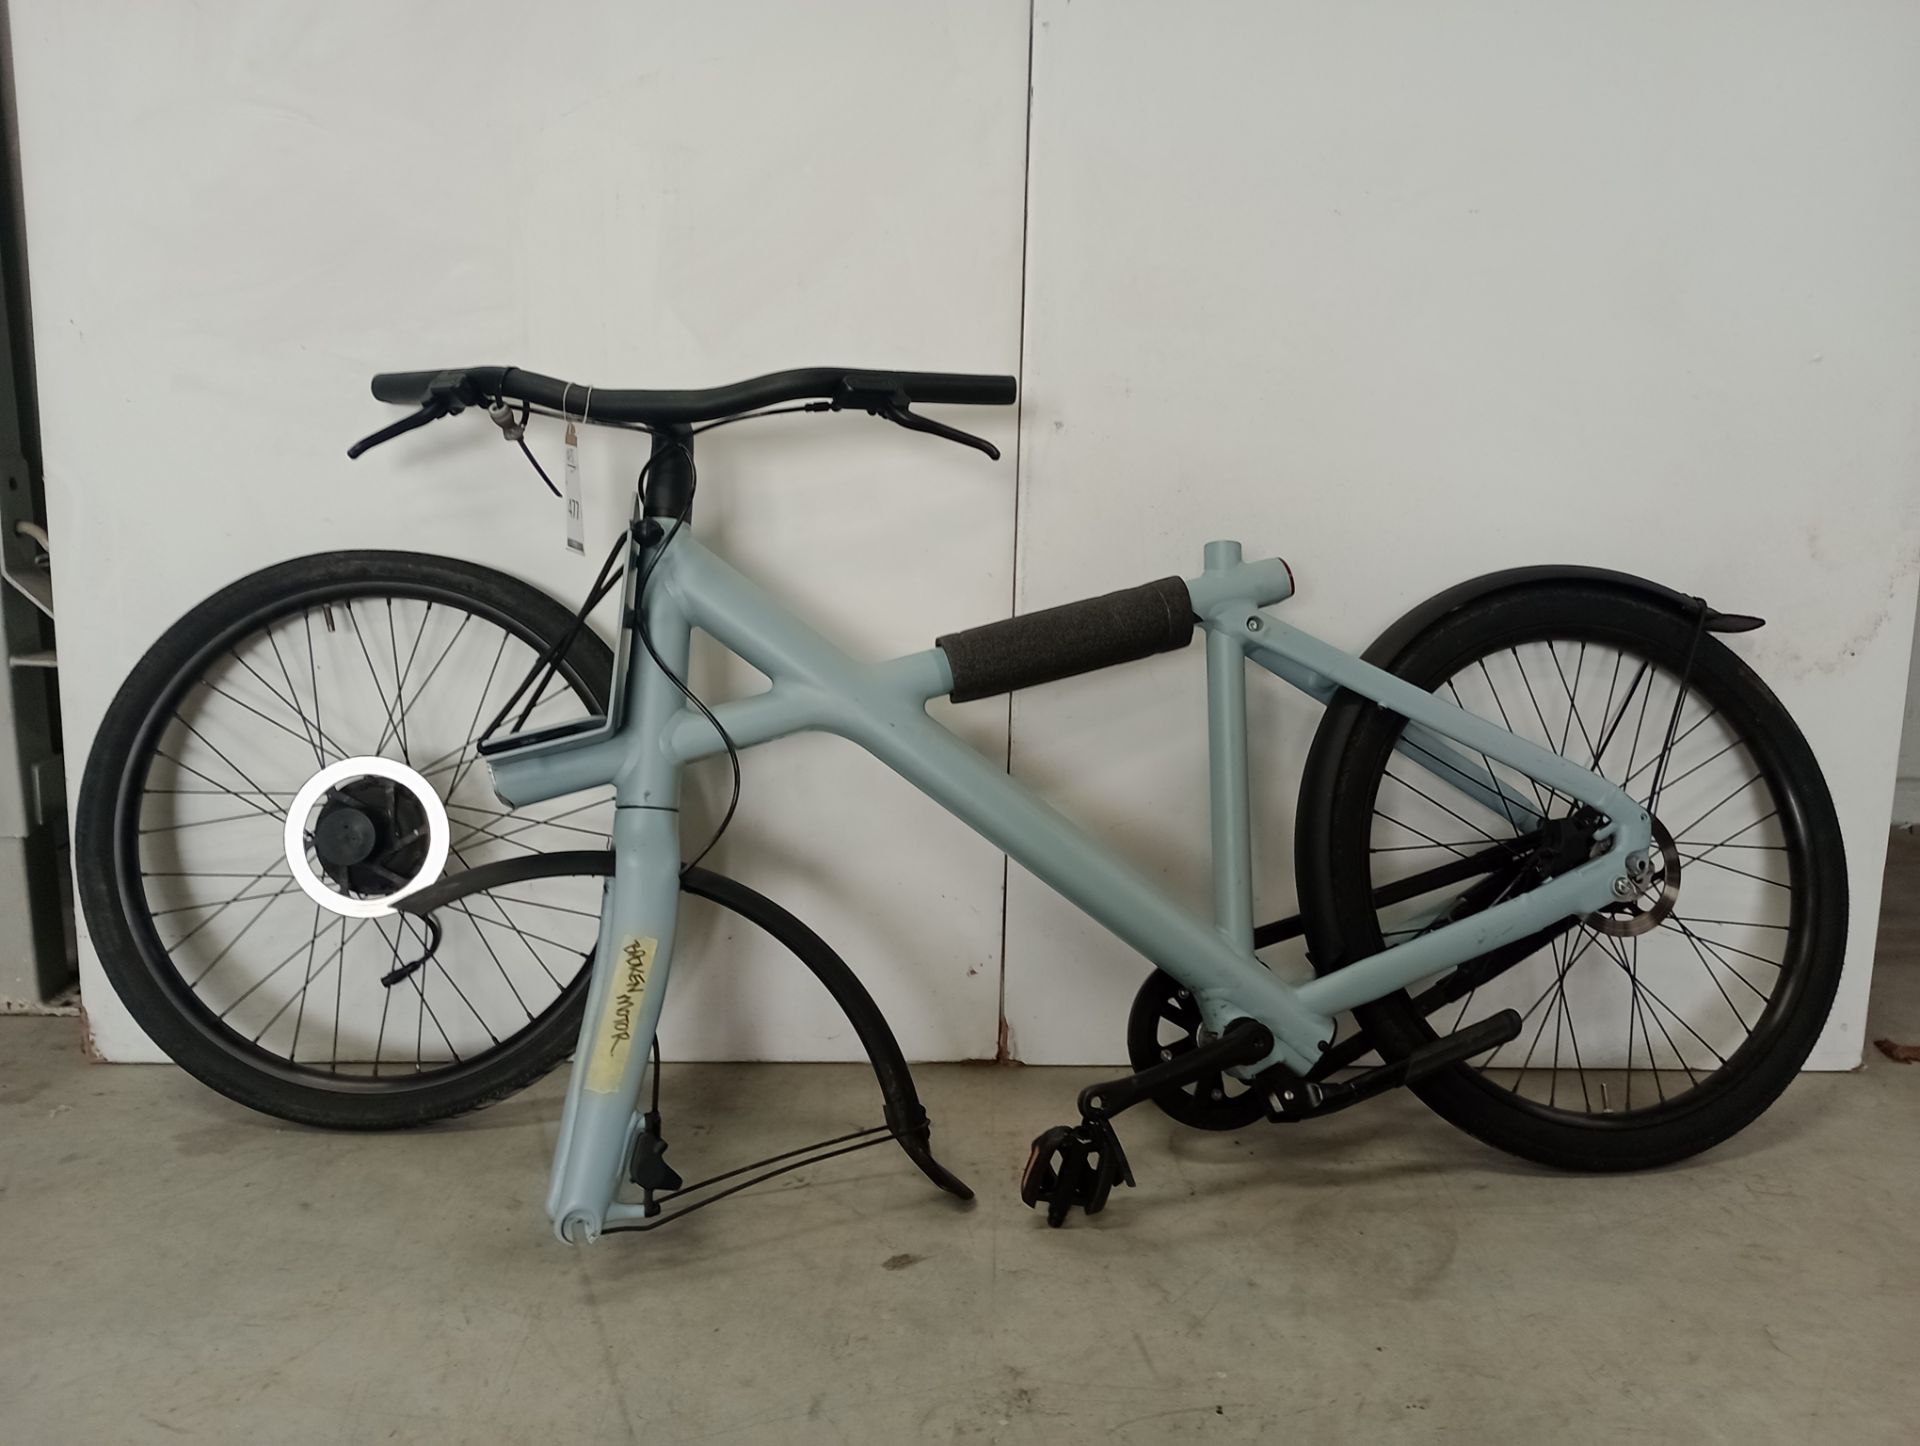 VanMoof X3 Electric Bike, Frame Number ASY4102312 (Broken Motor, Missing Saddle) (NOT ROADWORTHY -